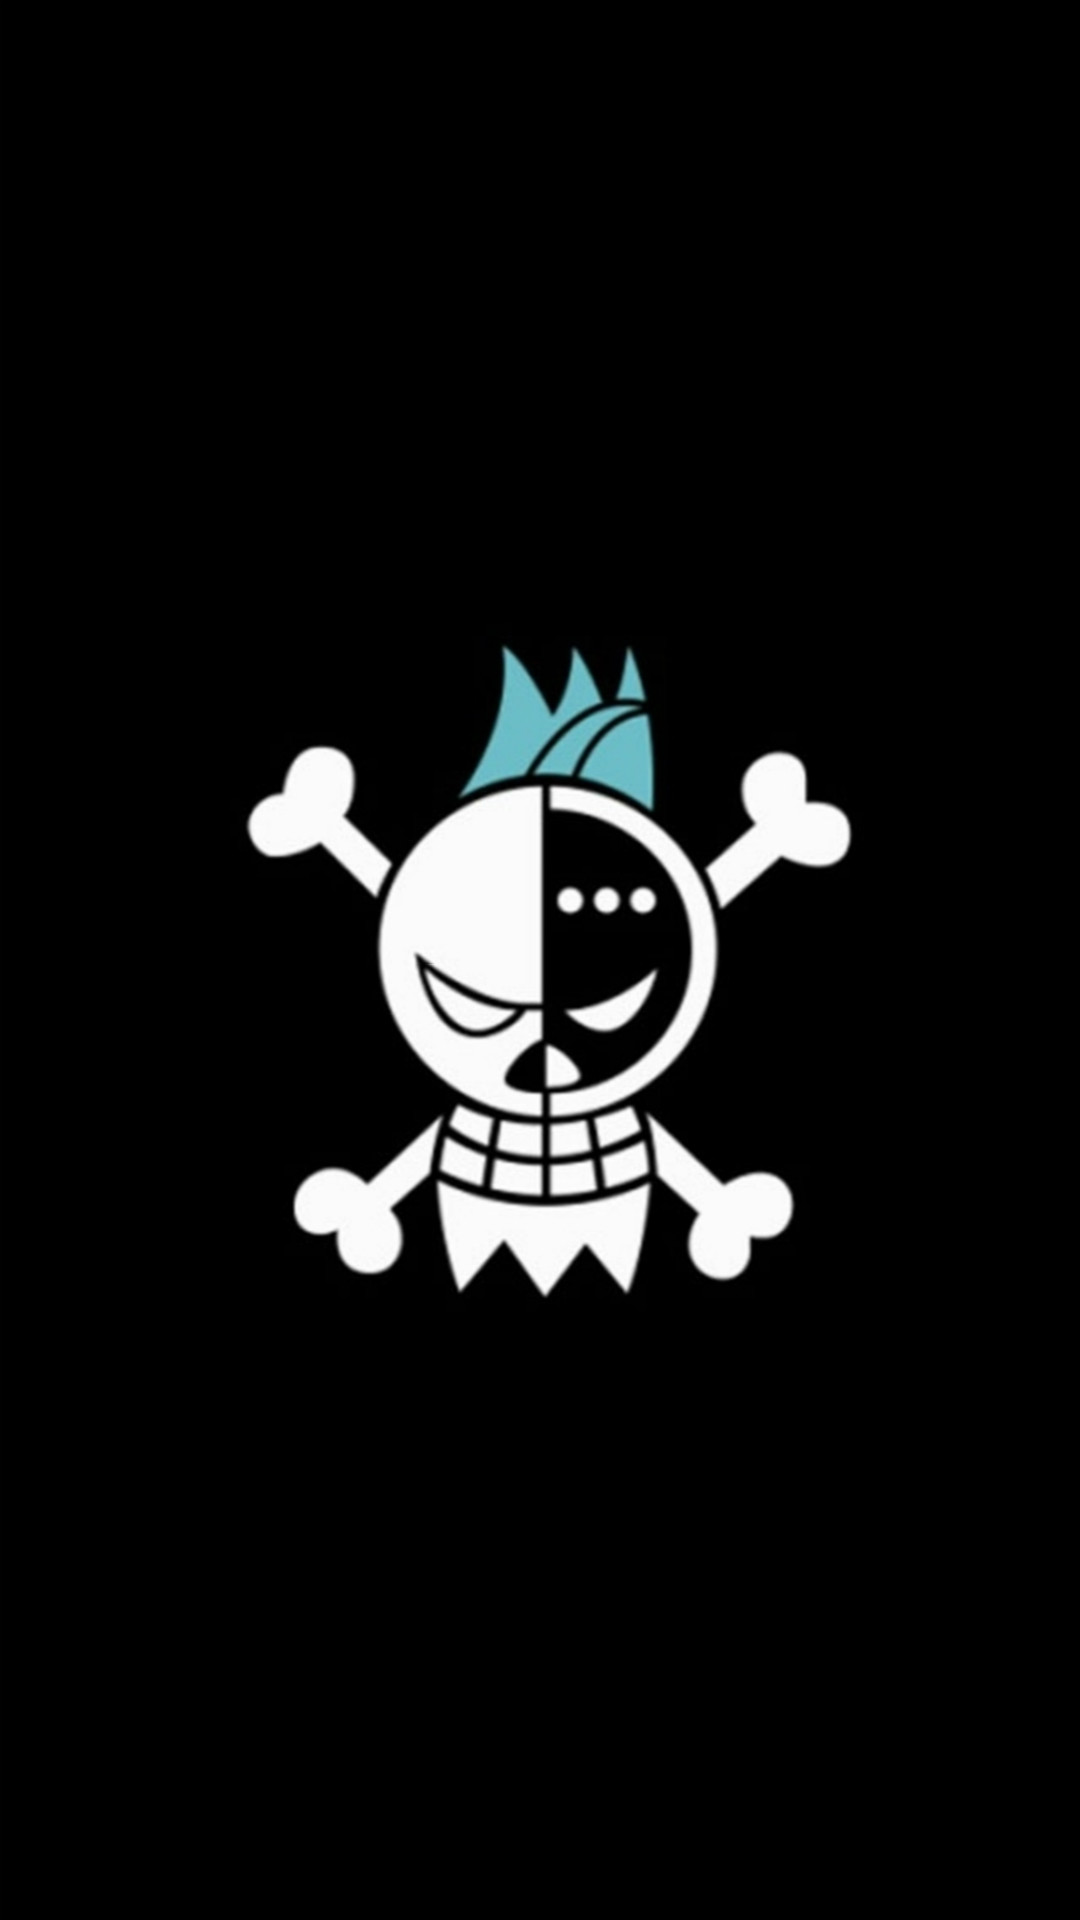 Fun Pirate Skull Logo Pattern iPhone 6 wallpaper